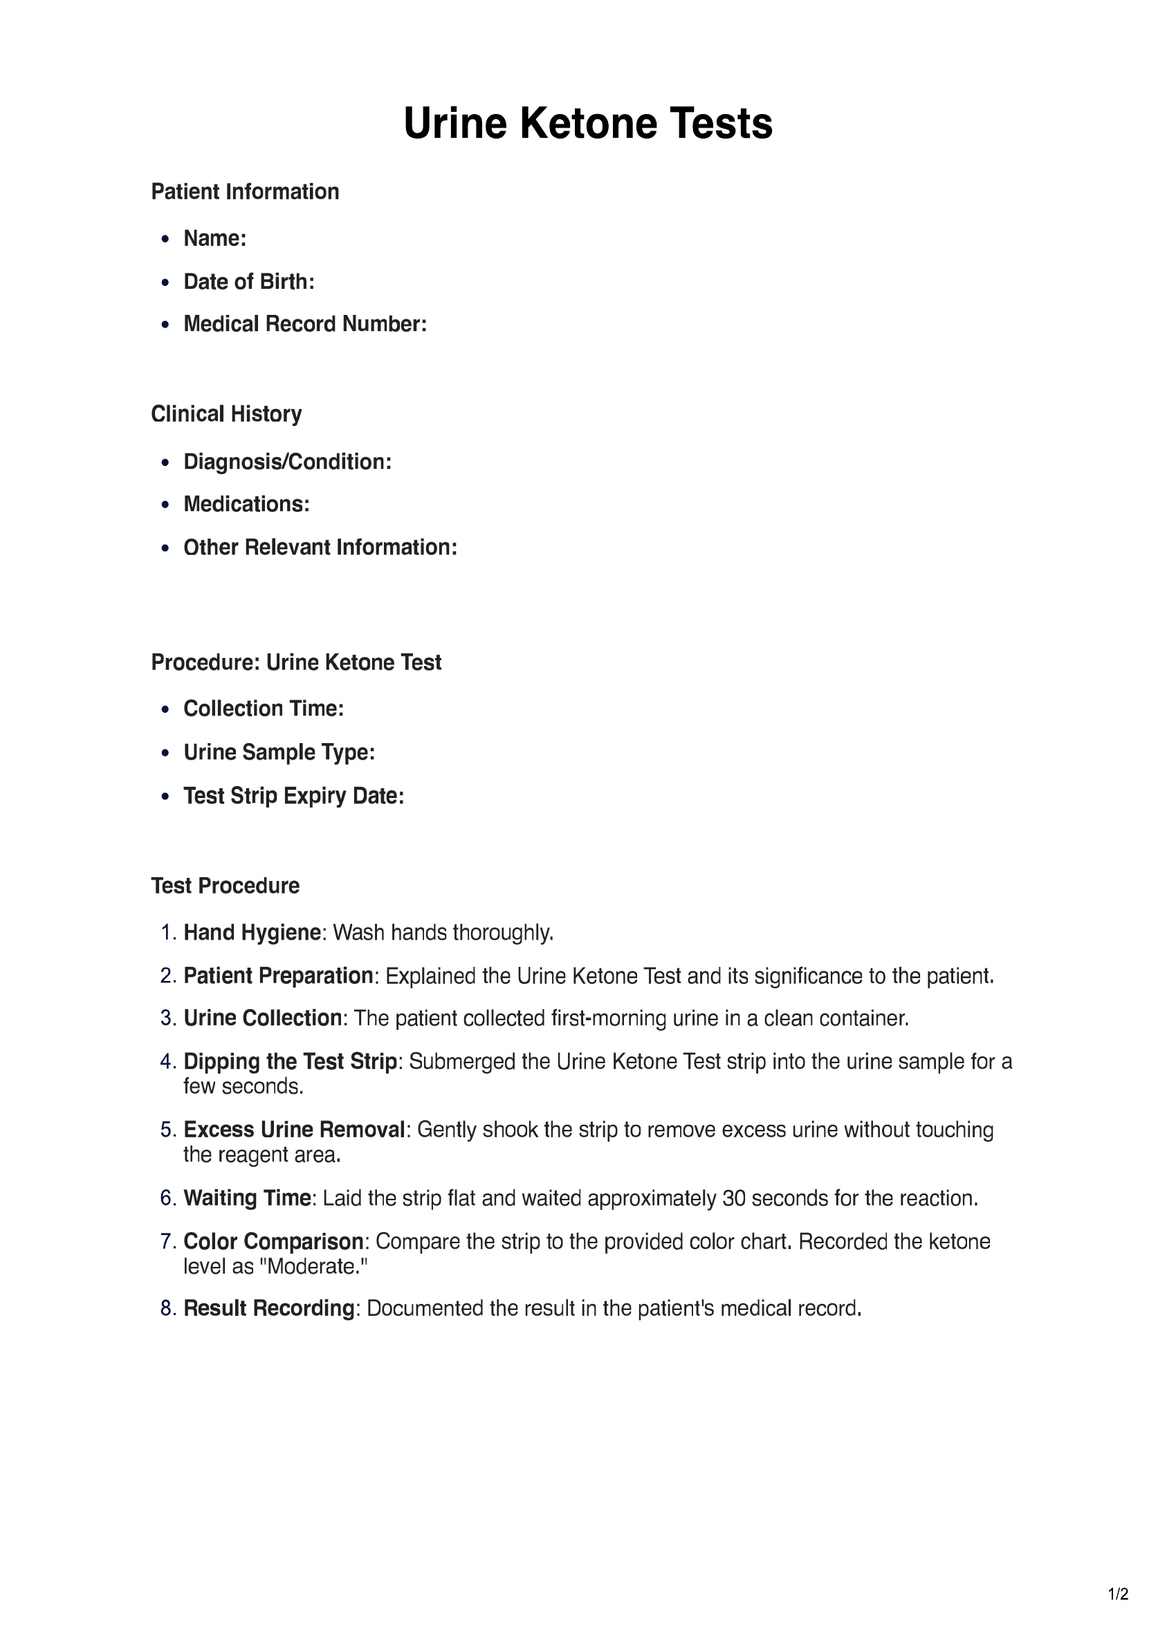 Kidney Stone Analysis PDF Example